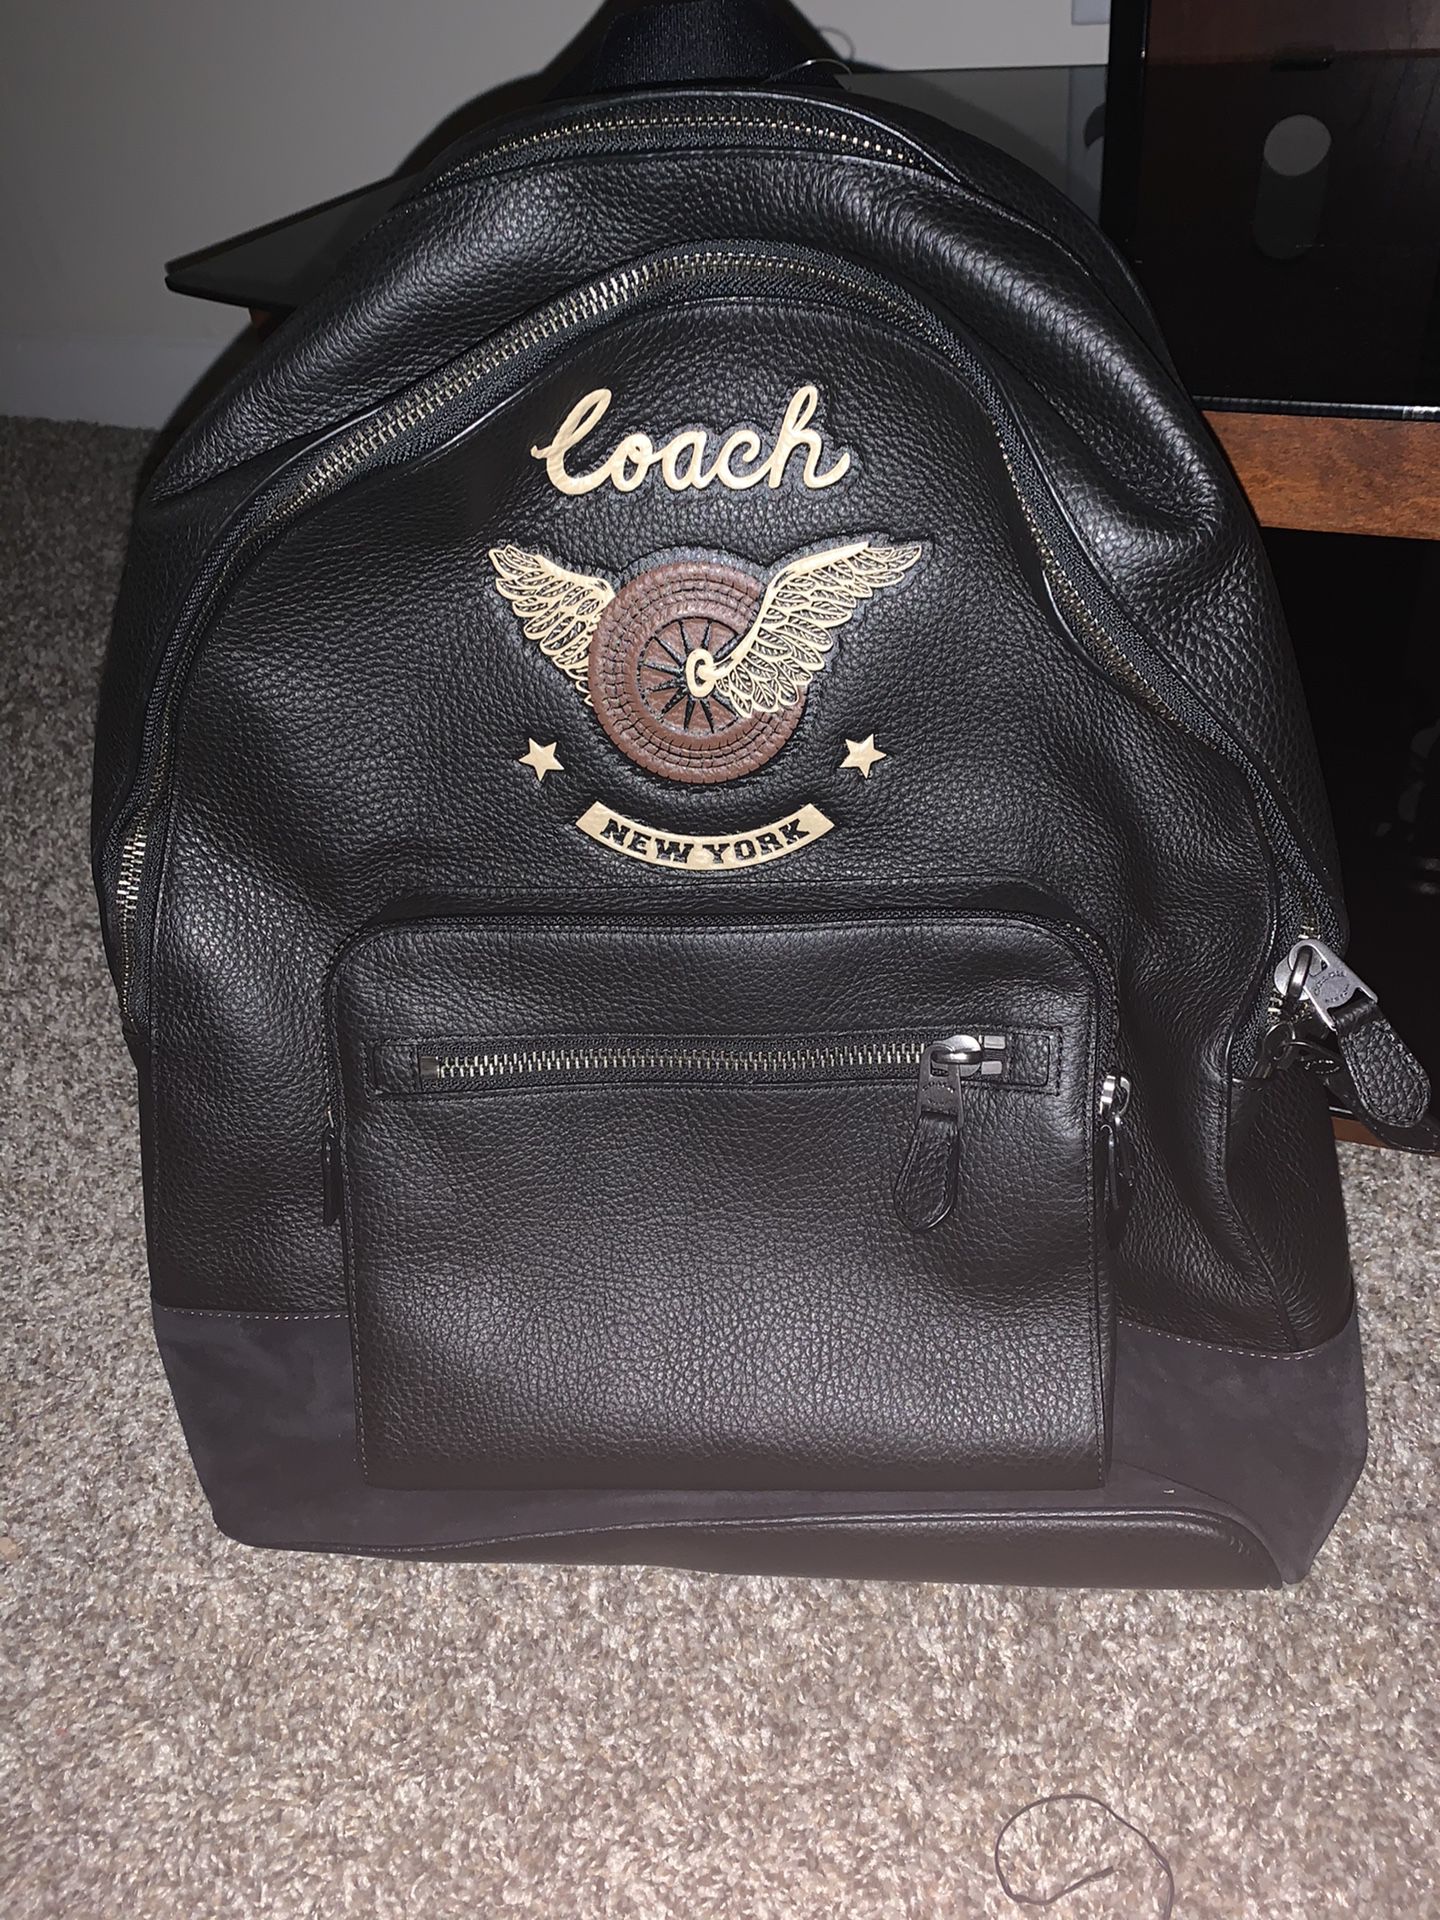 Coach Men’s Backpack ‘West BP Motif’ $650 MSRP